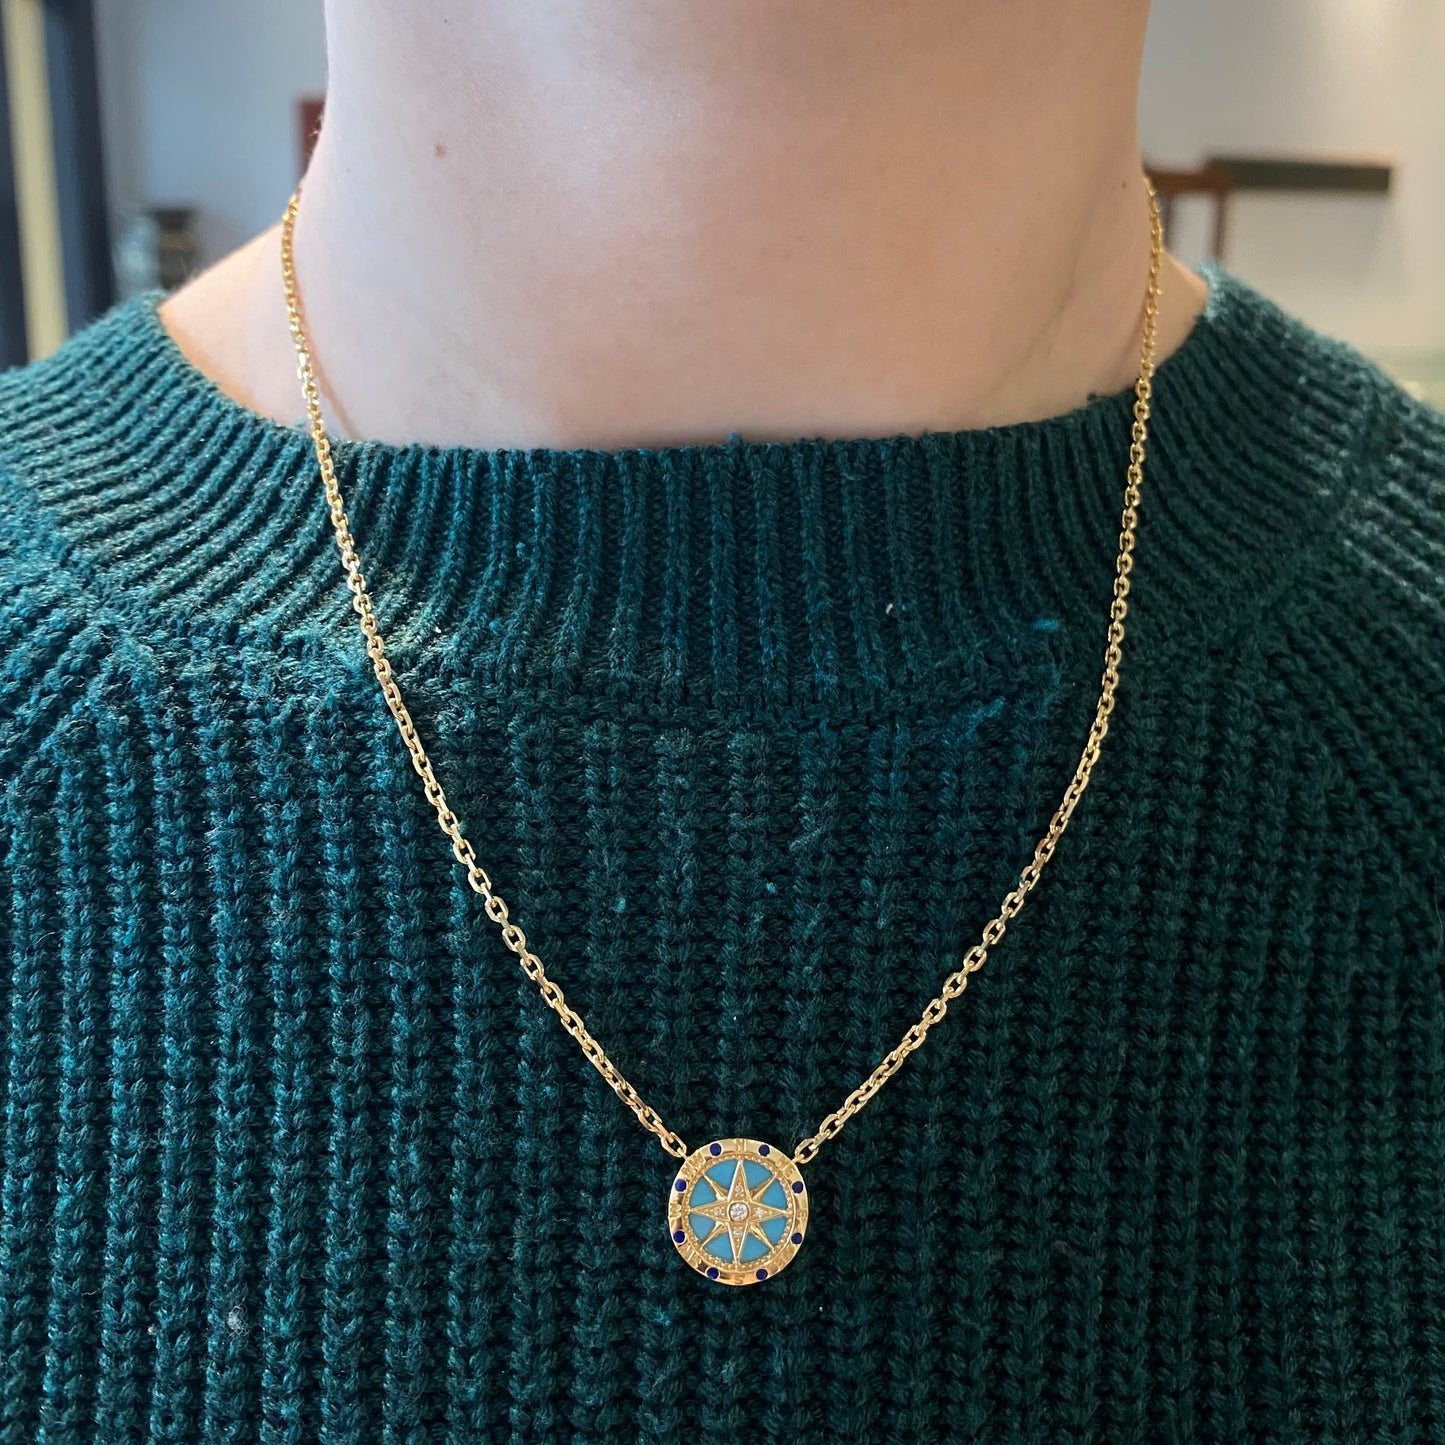 Diamond & Turquoise Compass Necklace